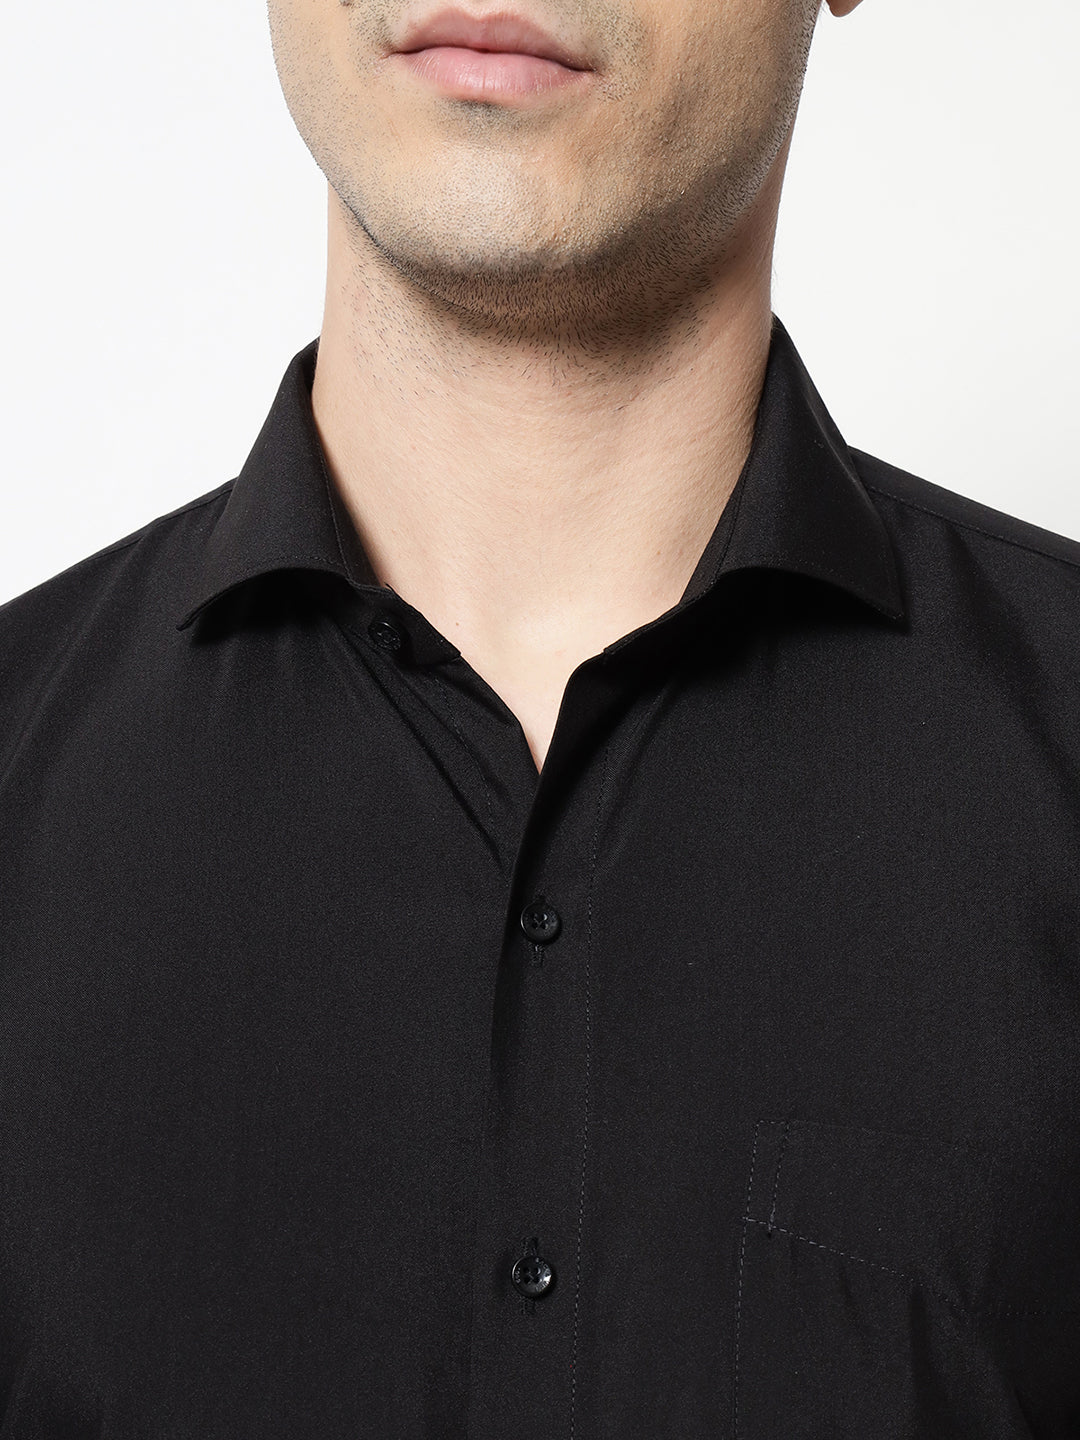 Black & White Men's Formal Cufflink Shirt White-2